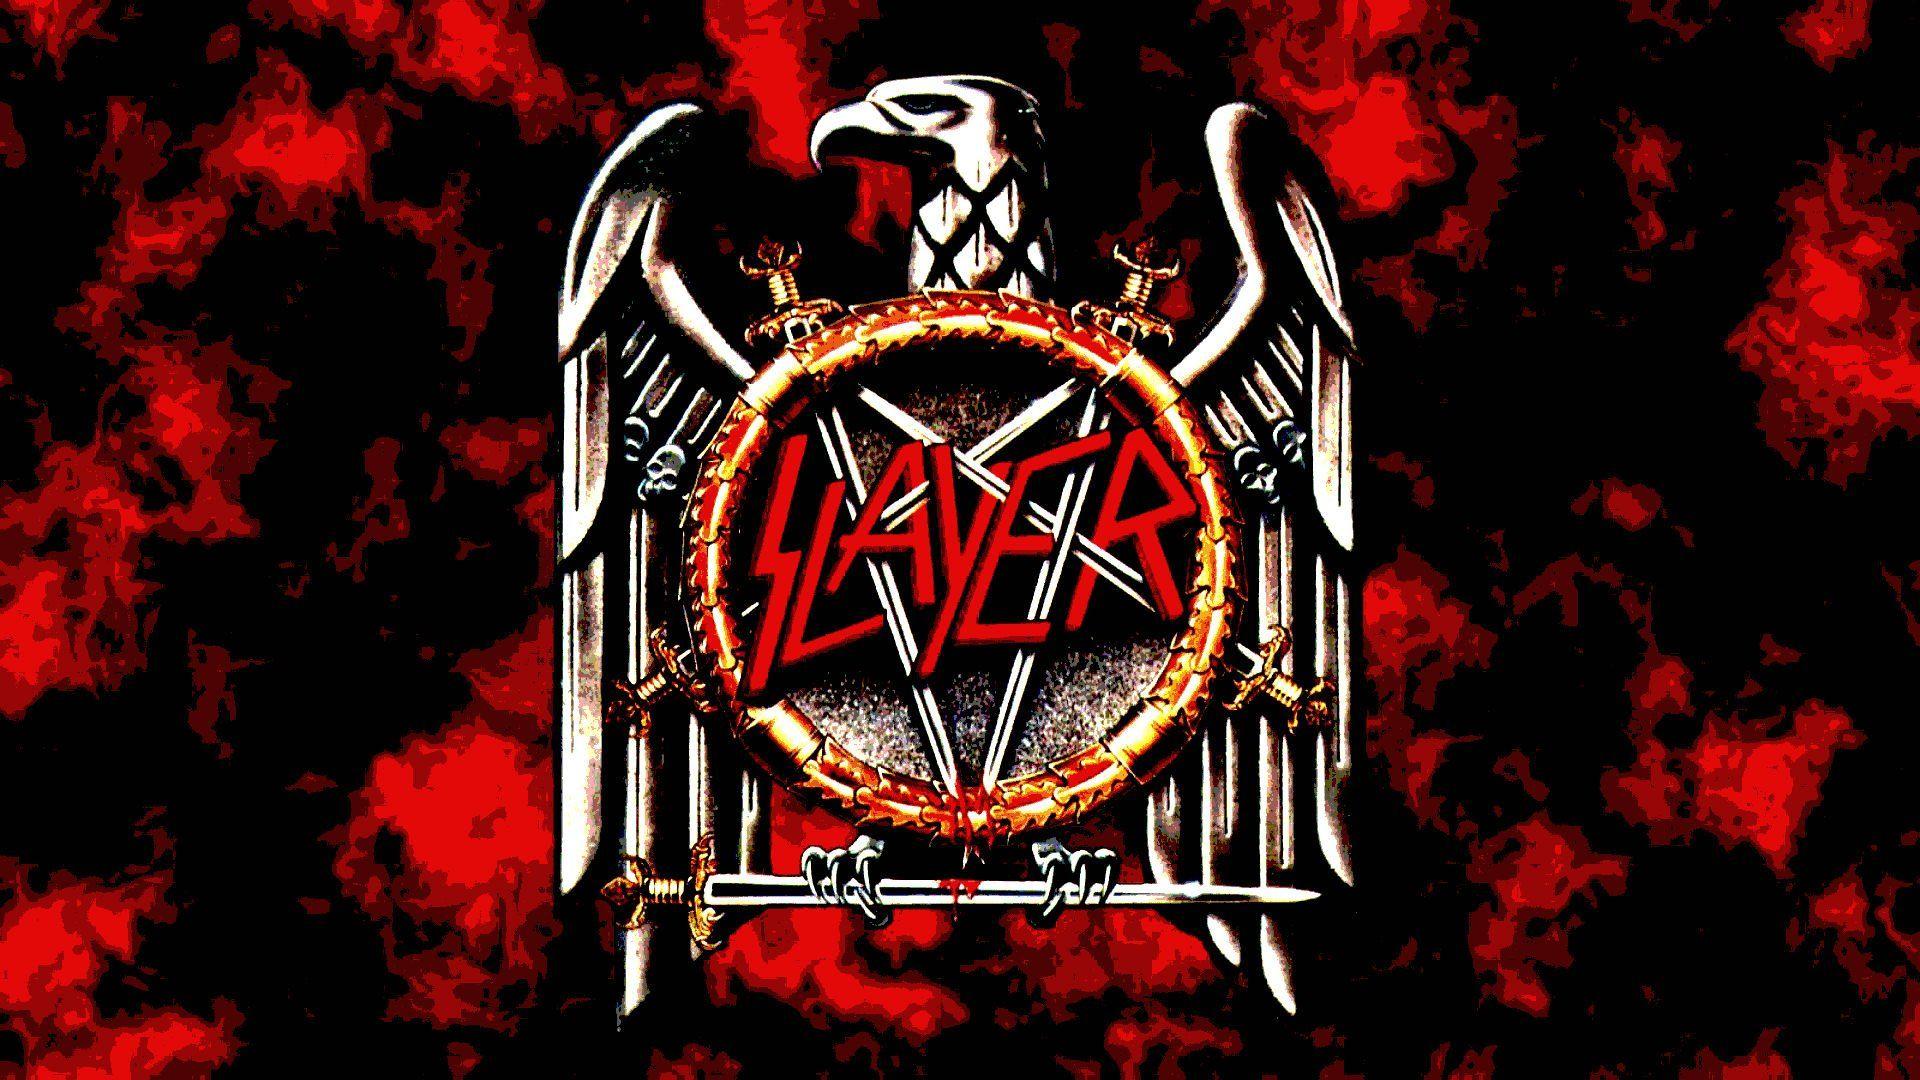 Free Download Slayer Band Wallpaper